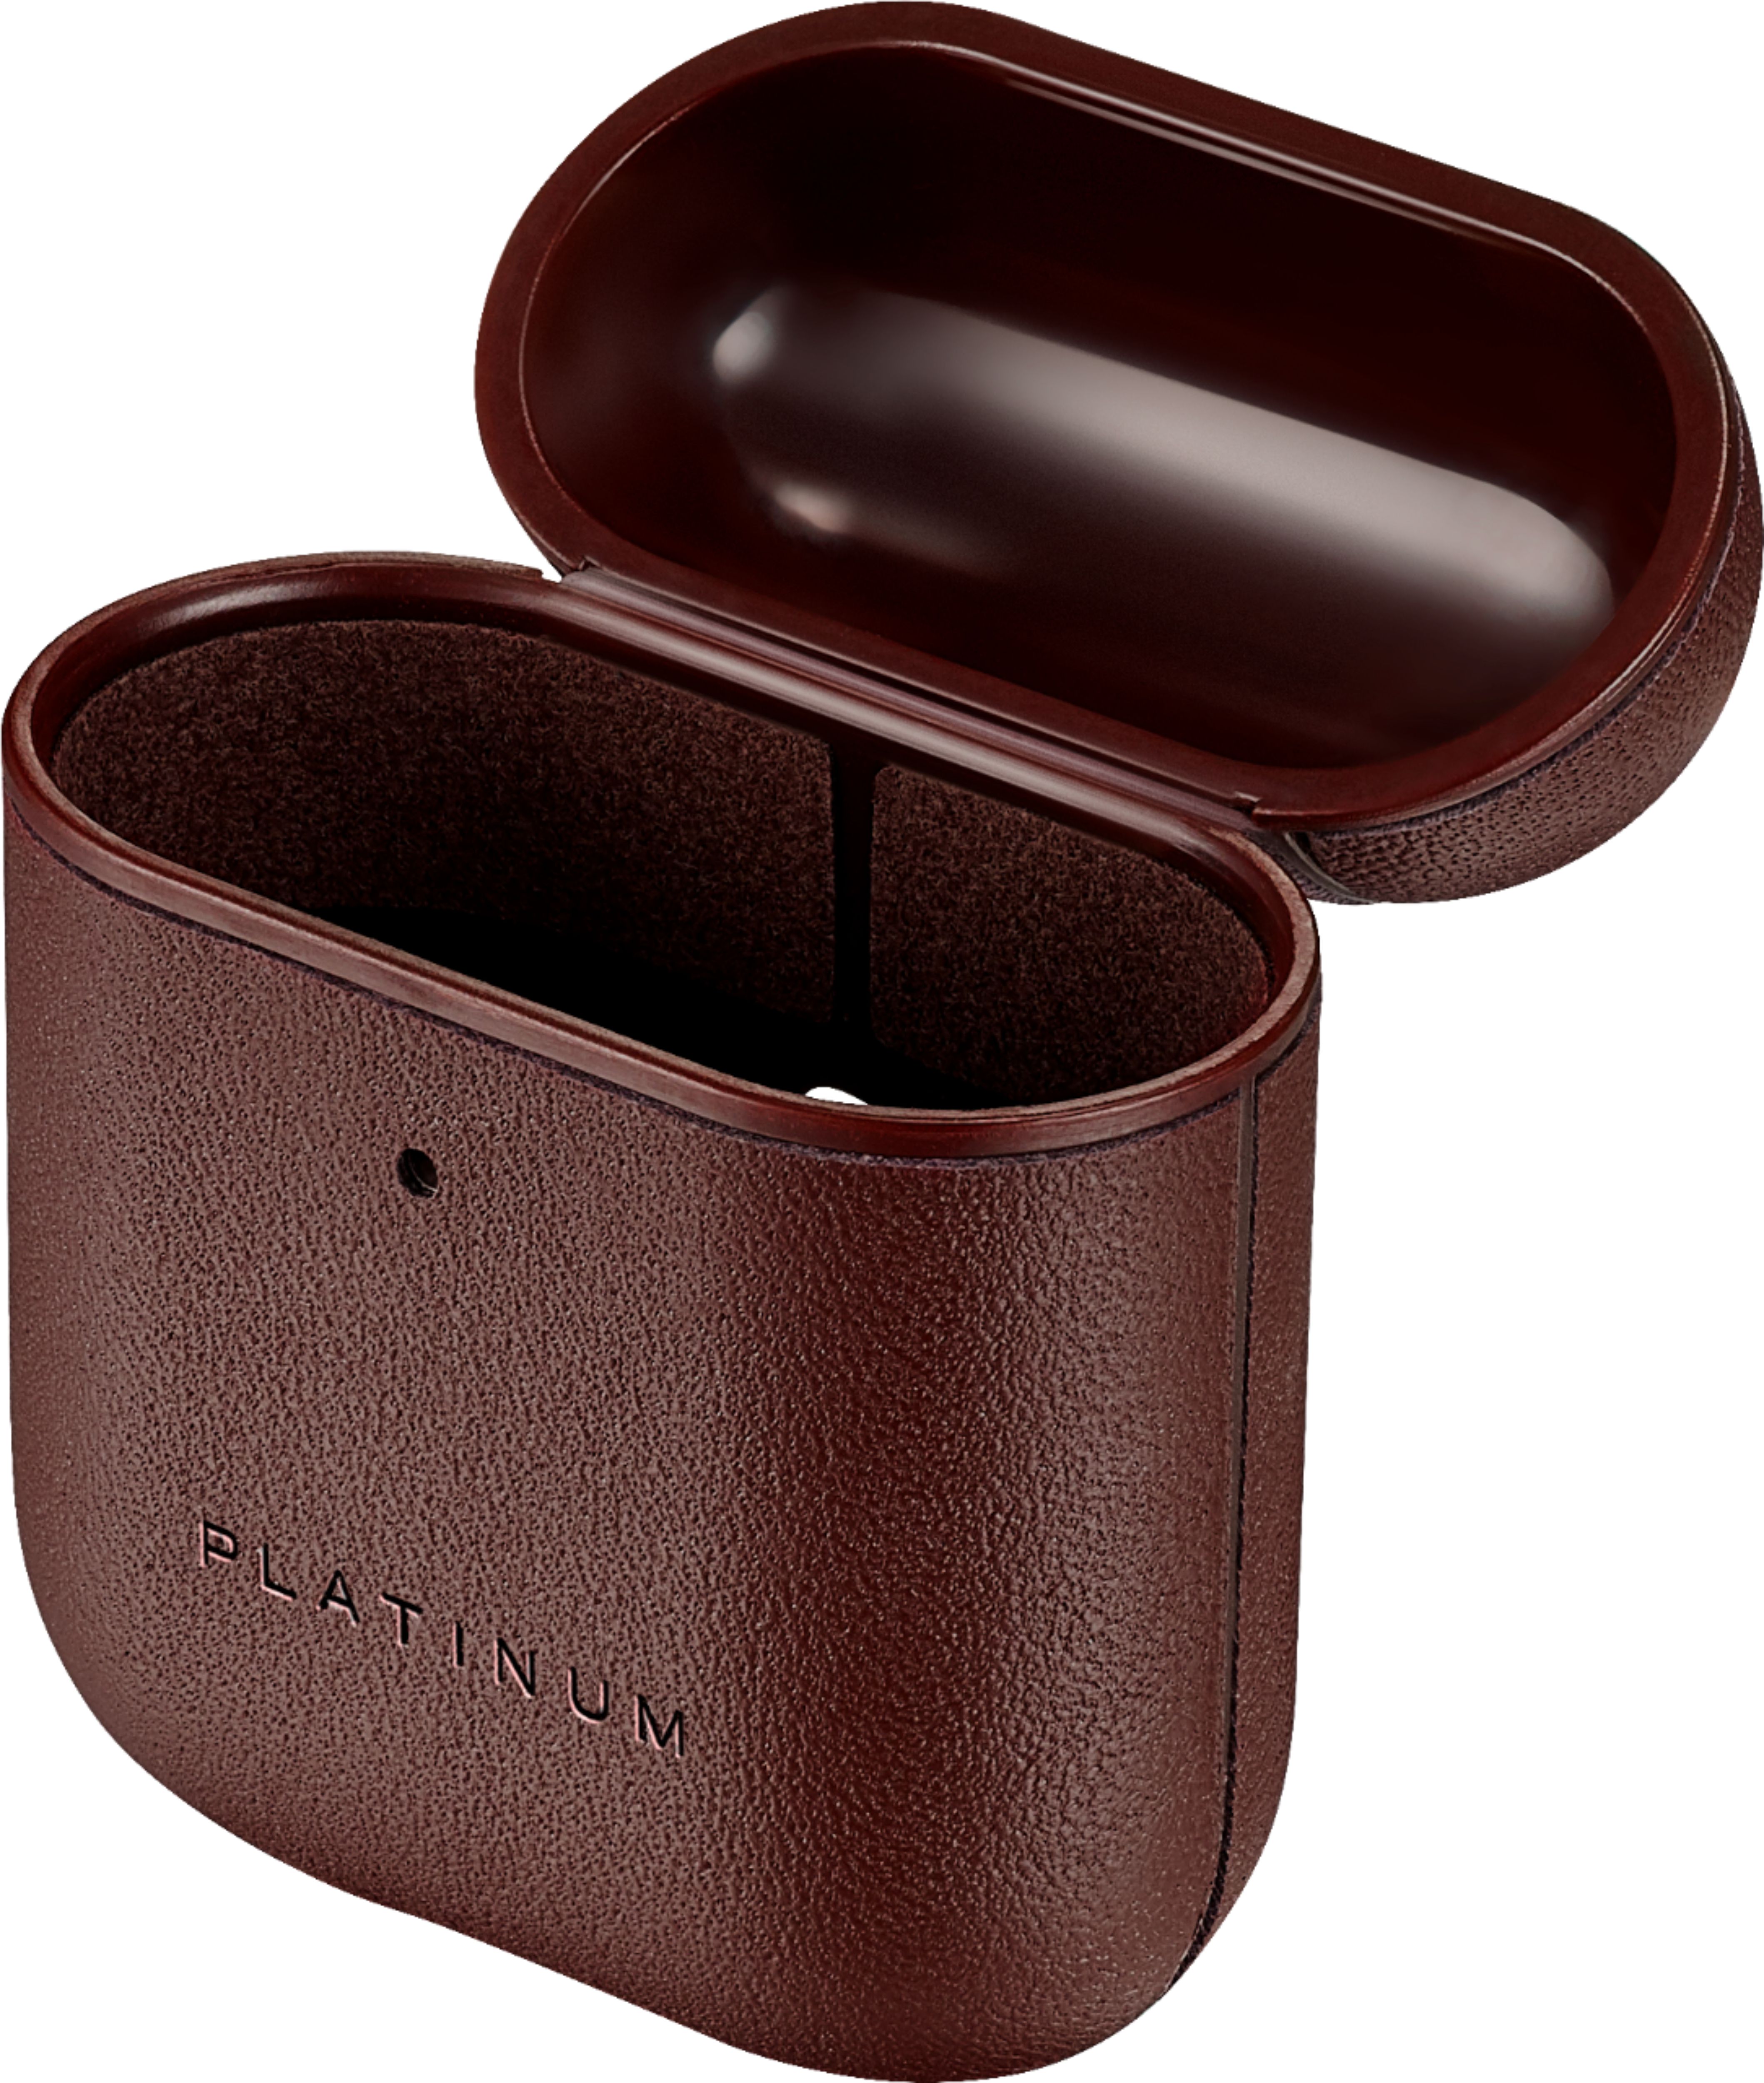 Best Buy: Platinum™ Leather Case for Apple AirPods Pro Black PT